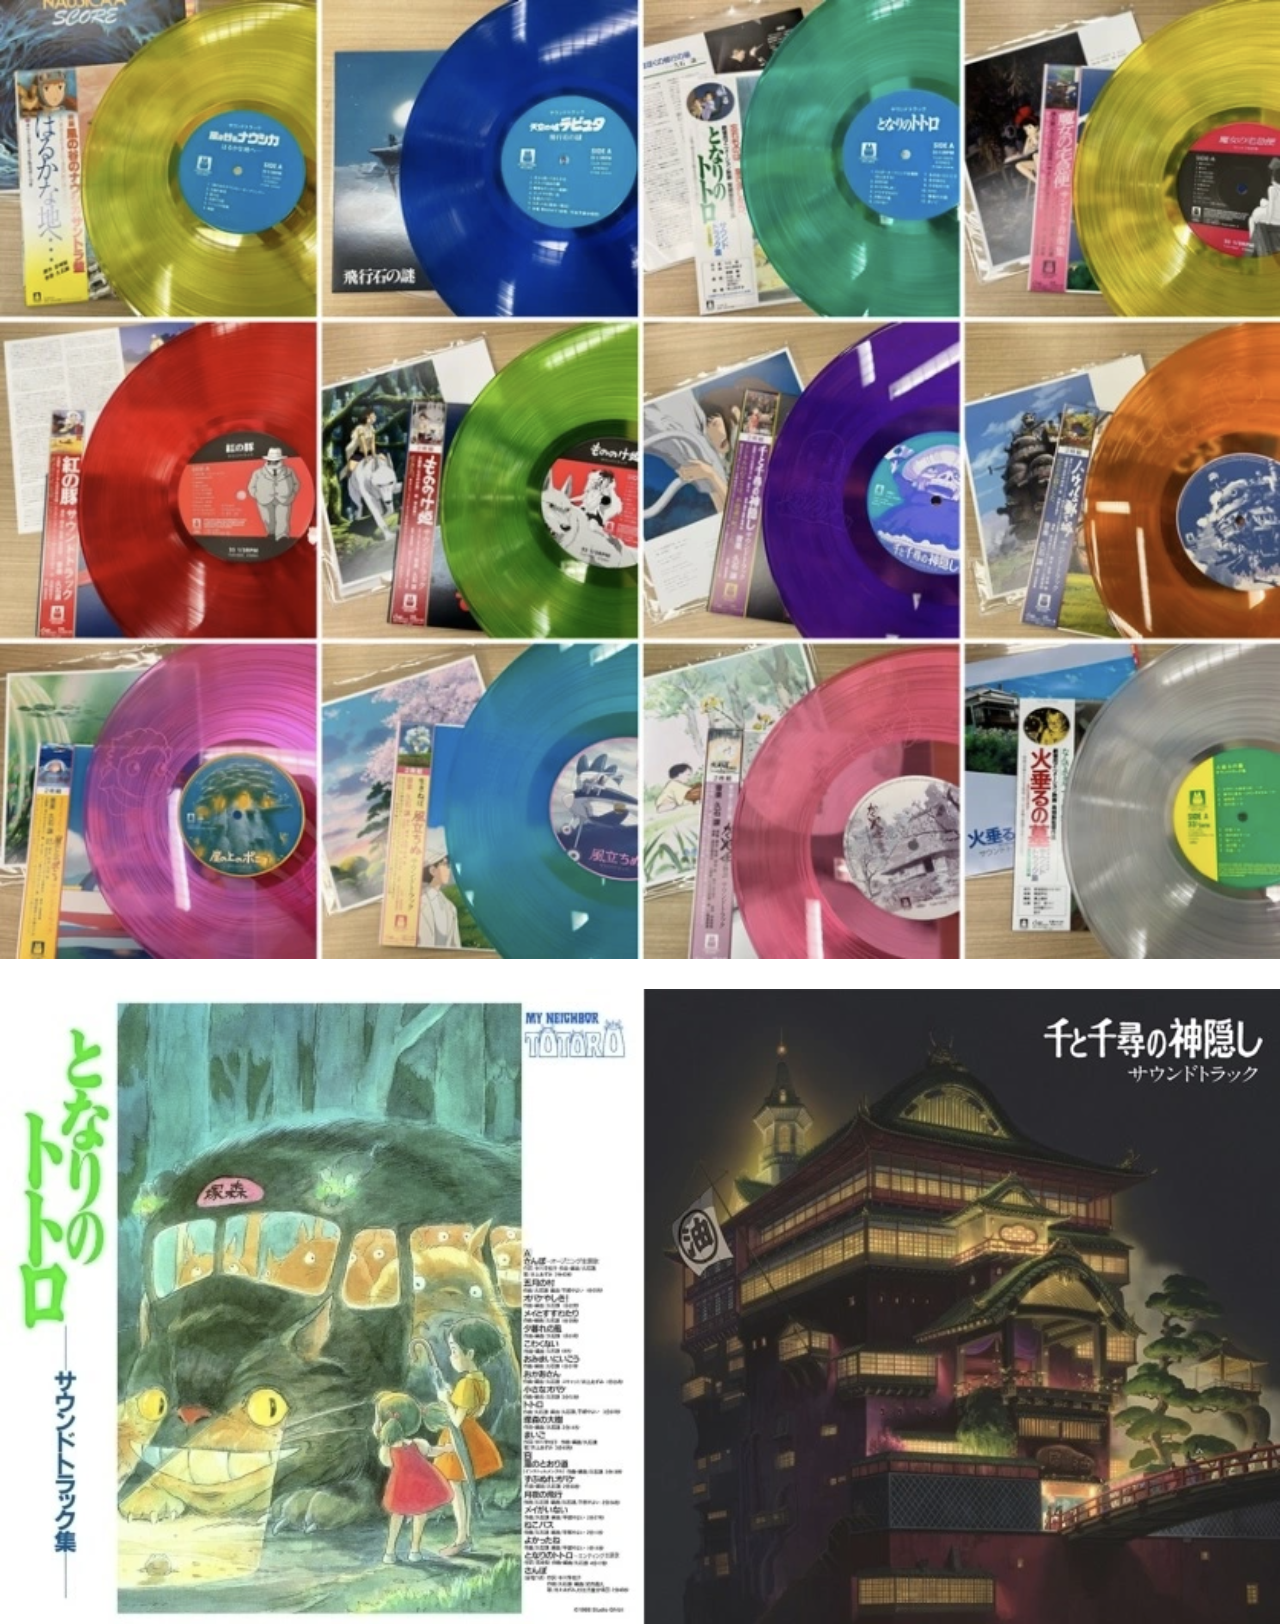 Michio Mamiya: Grave Of The Fireflies Soundtrack Vinyl LP